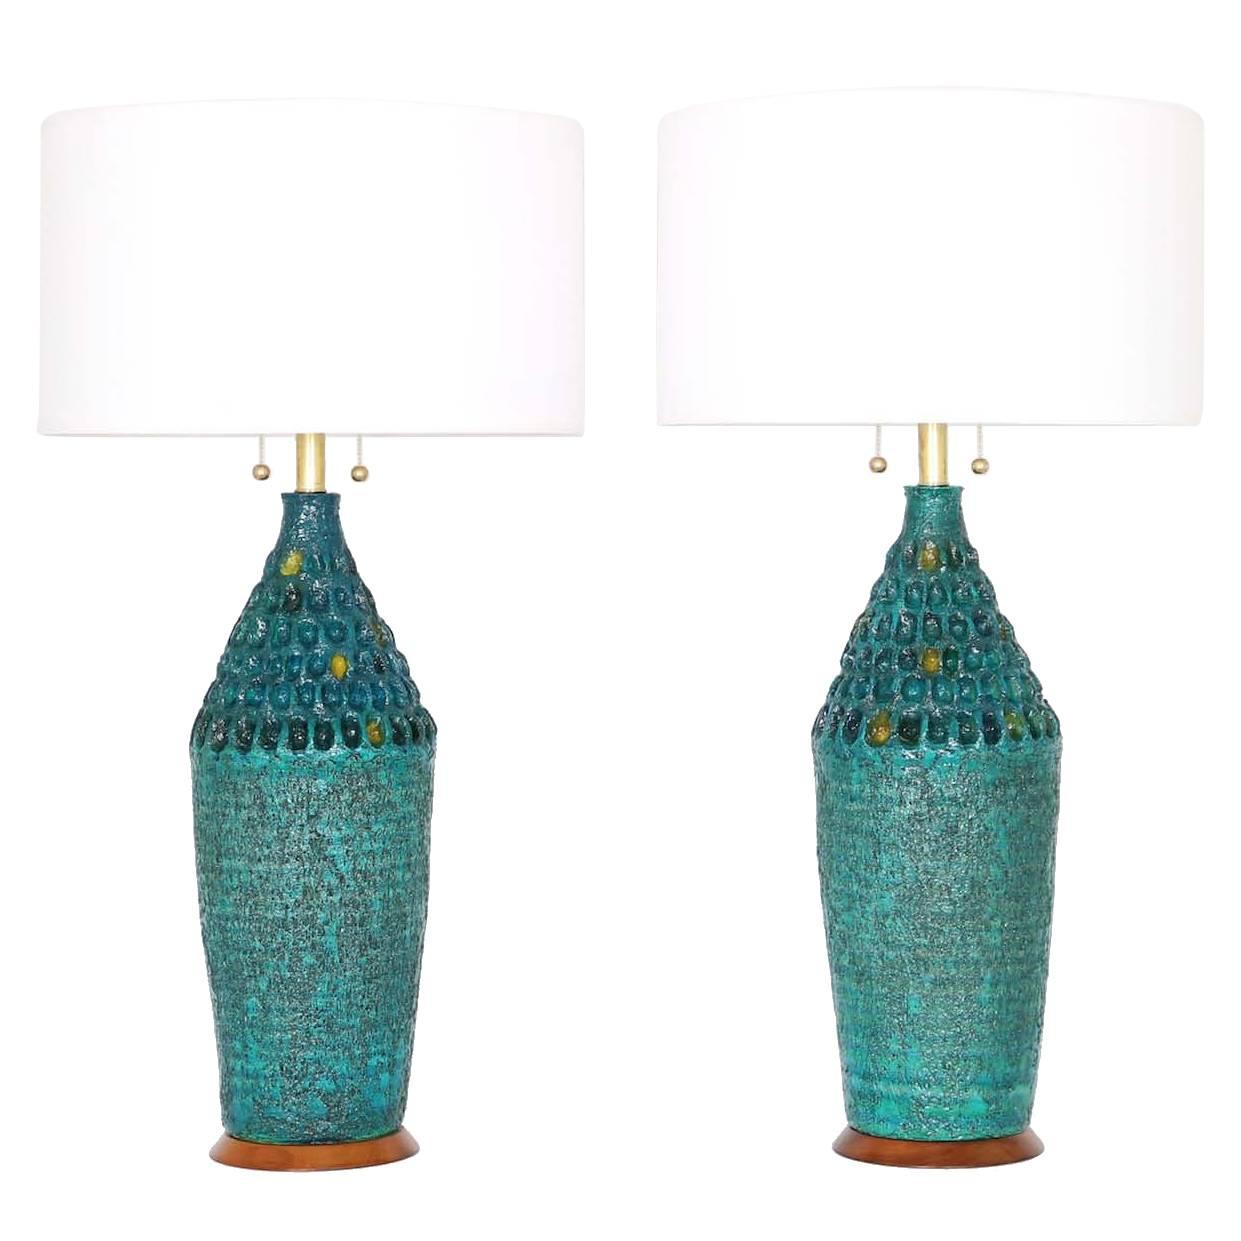 Midcentury Pair of Brutalist Style Ceramic Lamps by Quartite Creative Corp.